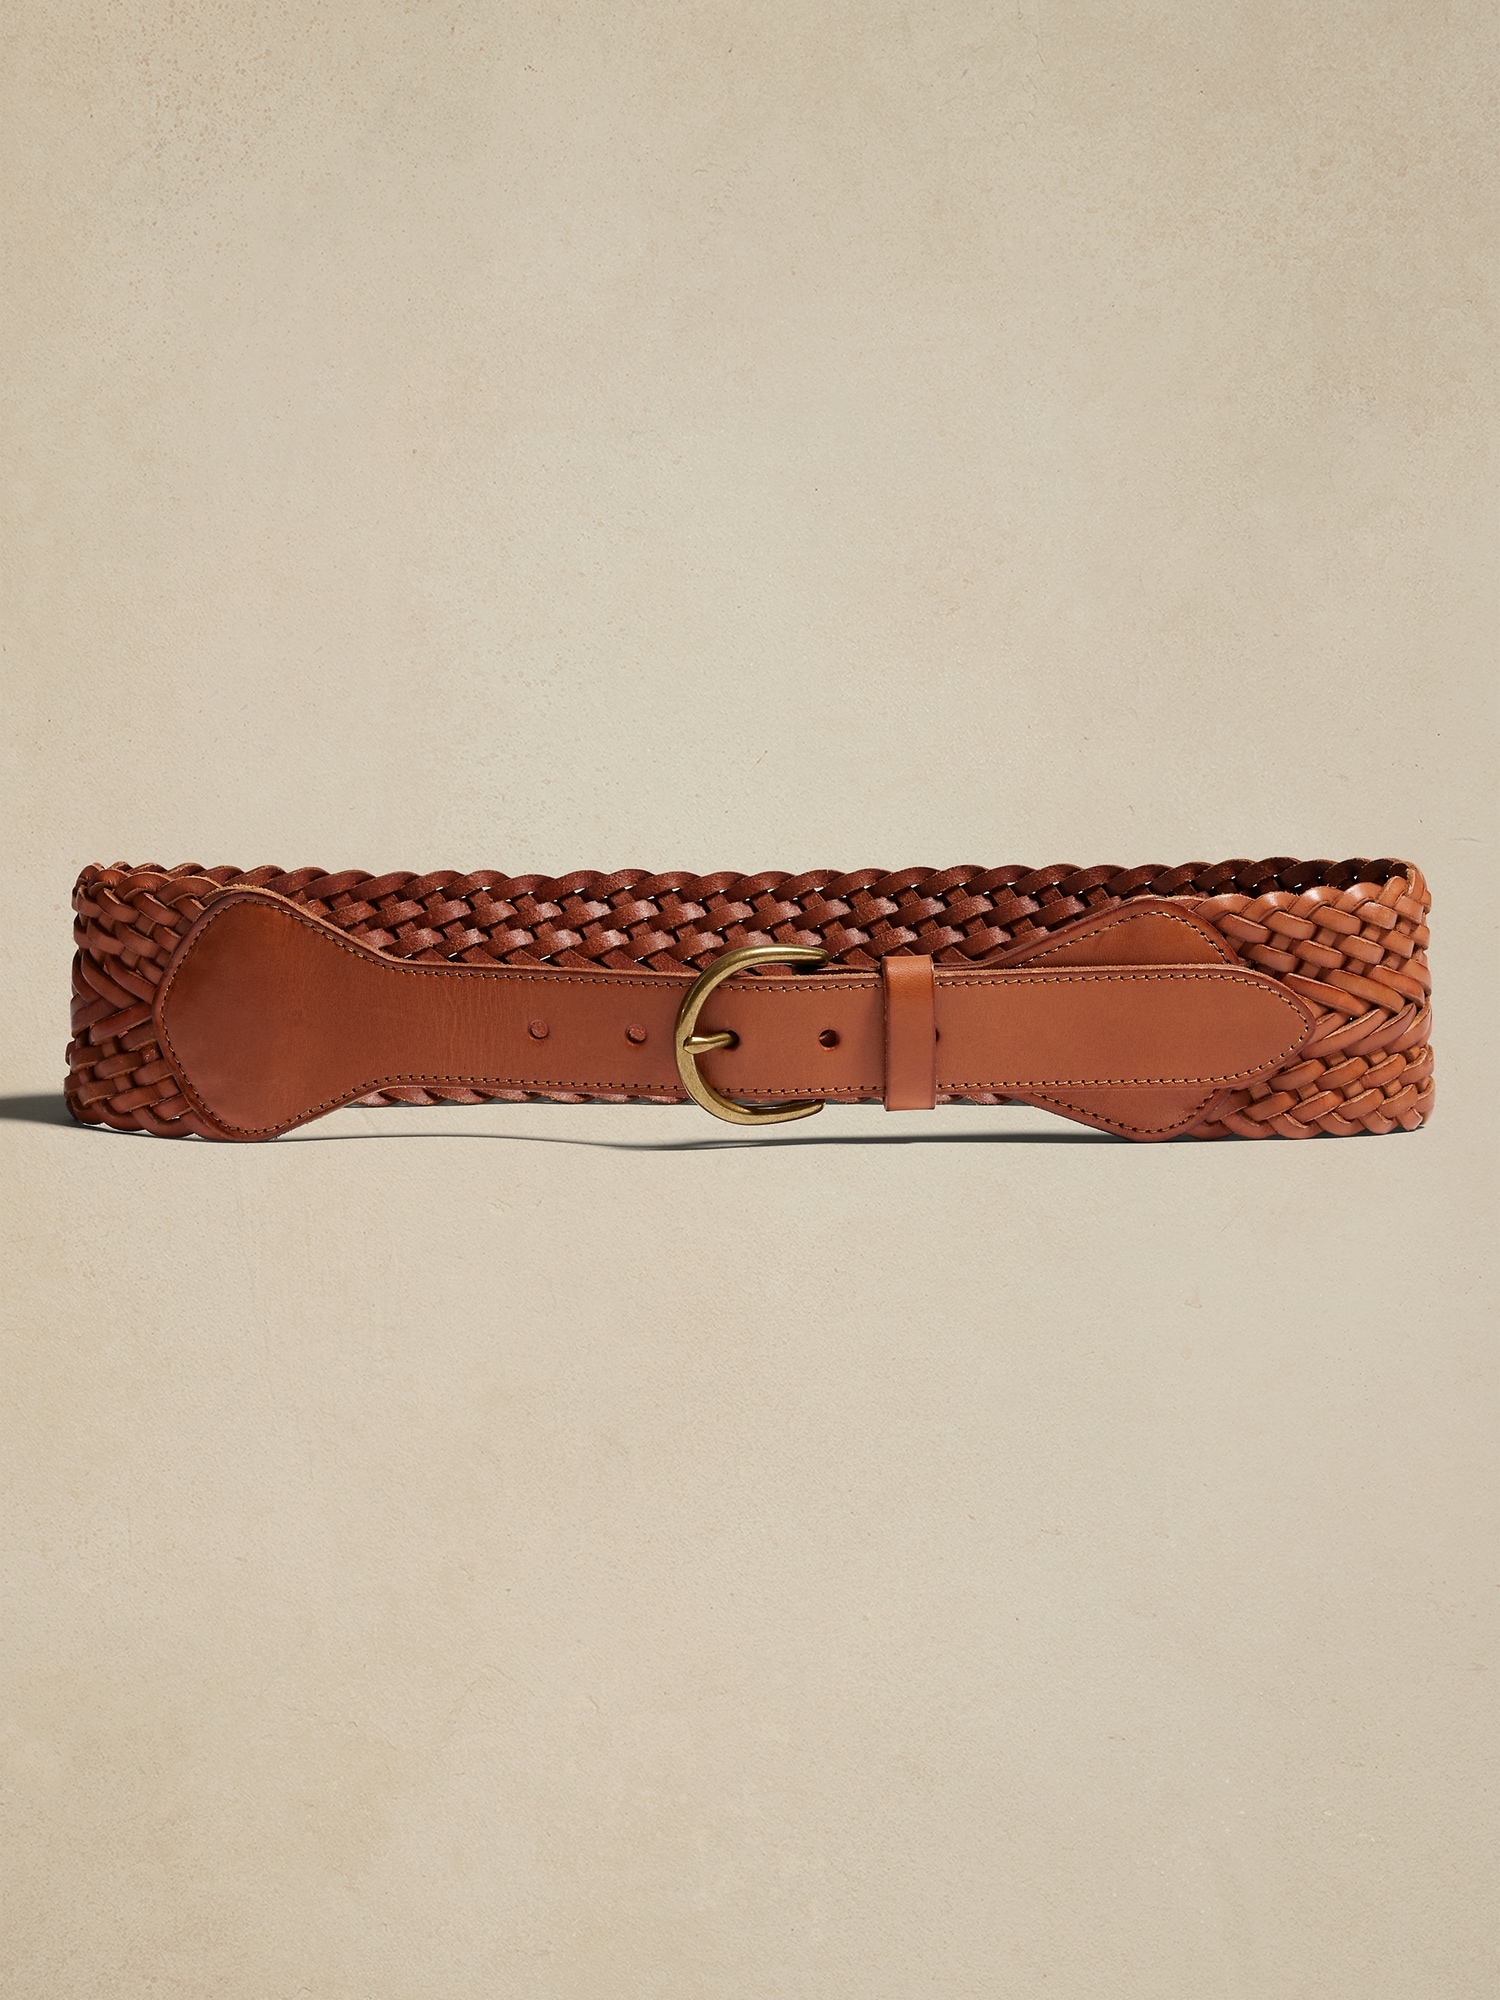 Gap Women's Braided Leather Belt